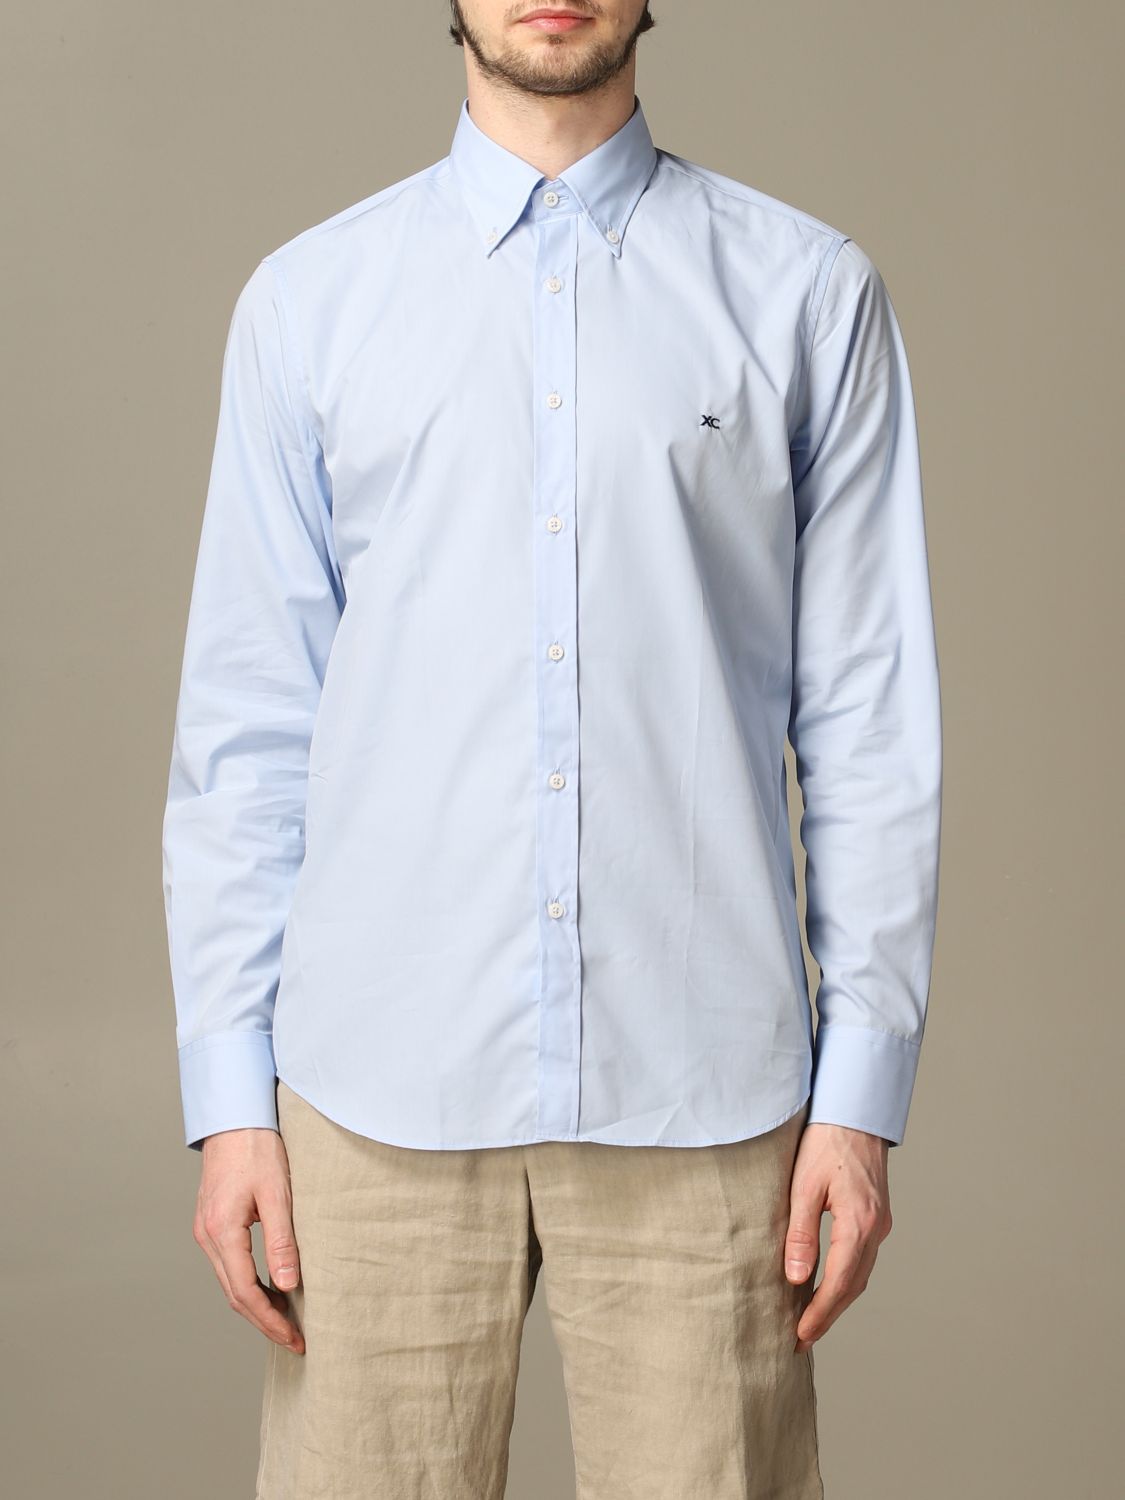 Shirt Xc: Xc shirt for men gnawed blue 1